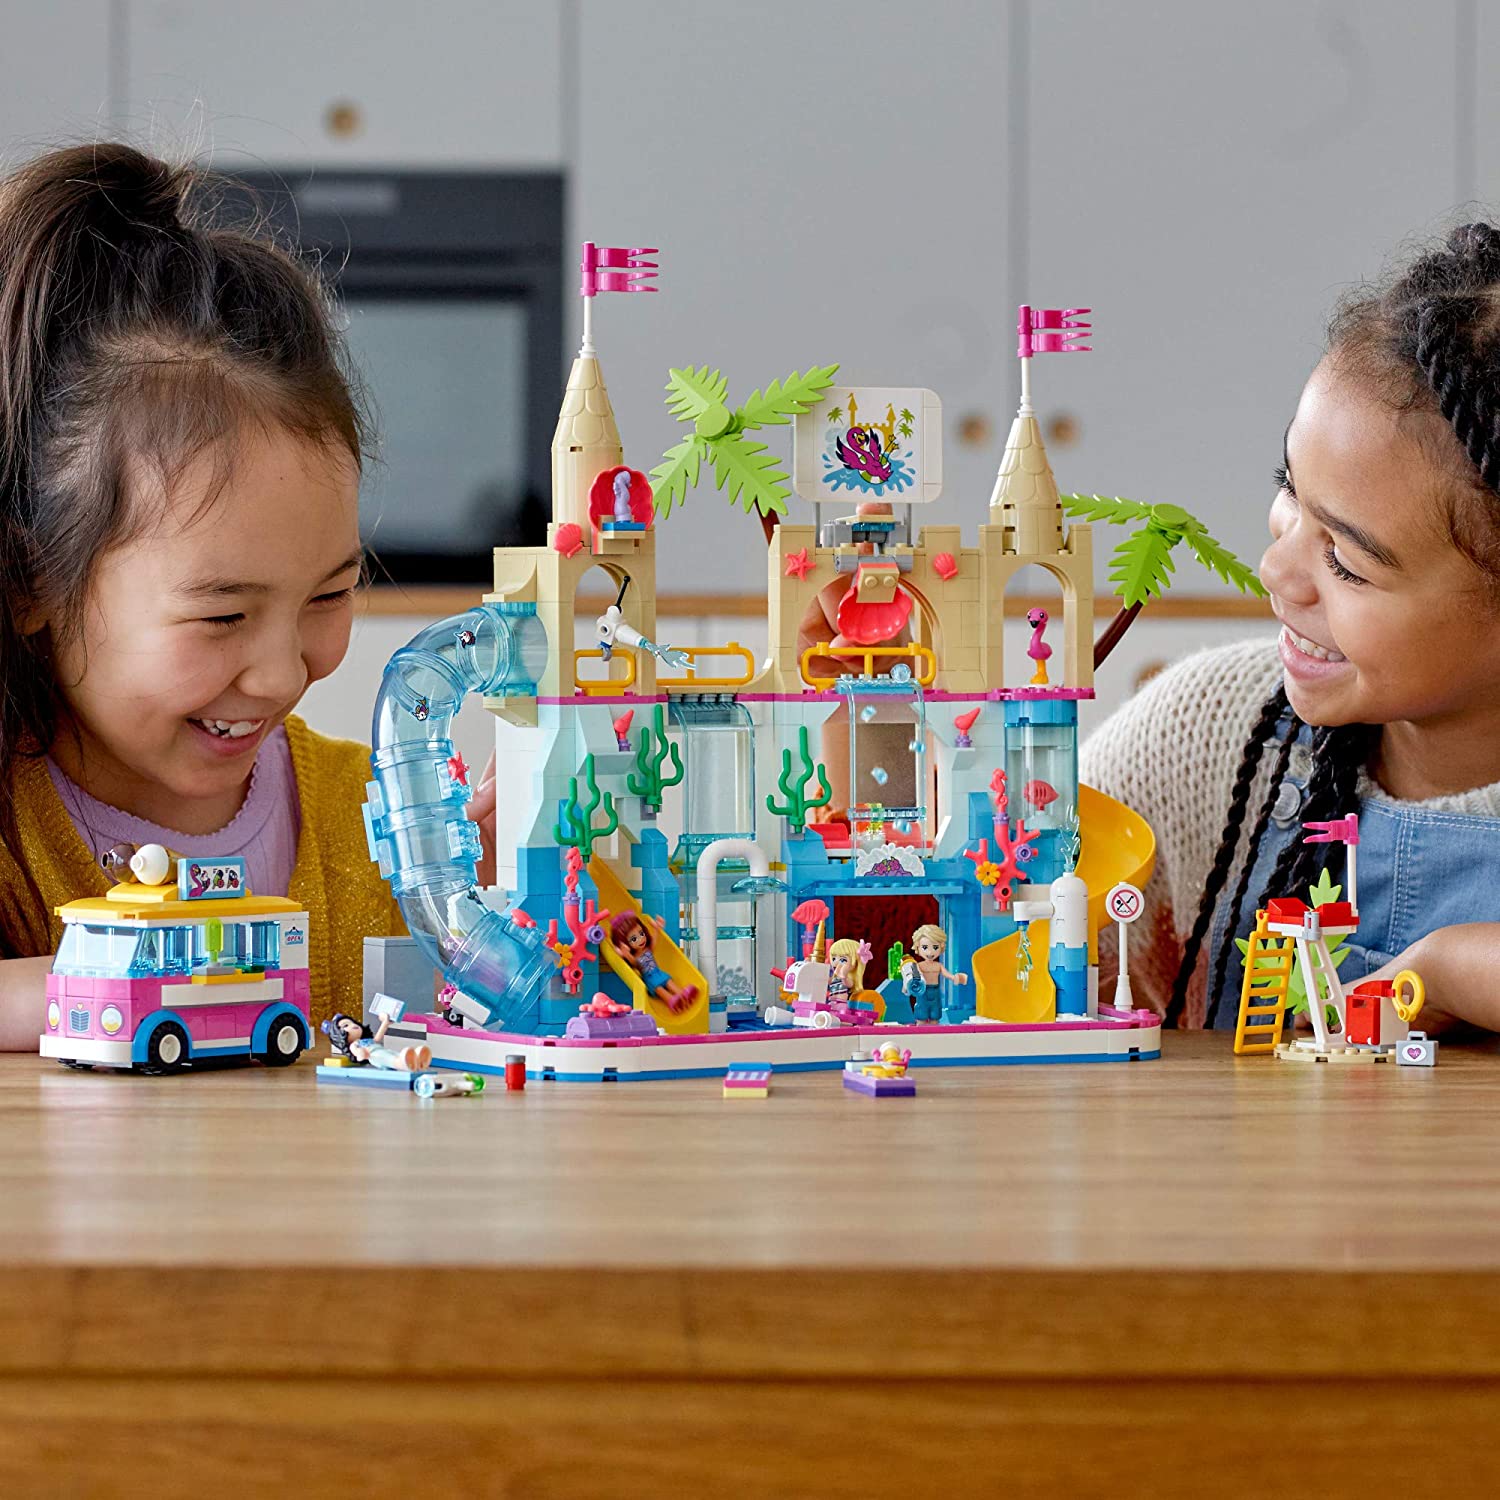 Lego Friends Summer Fun Water Park Playset - ANB Baby -block set